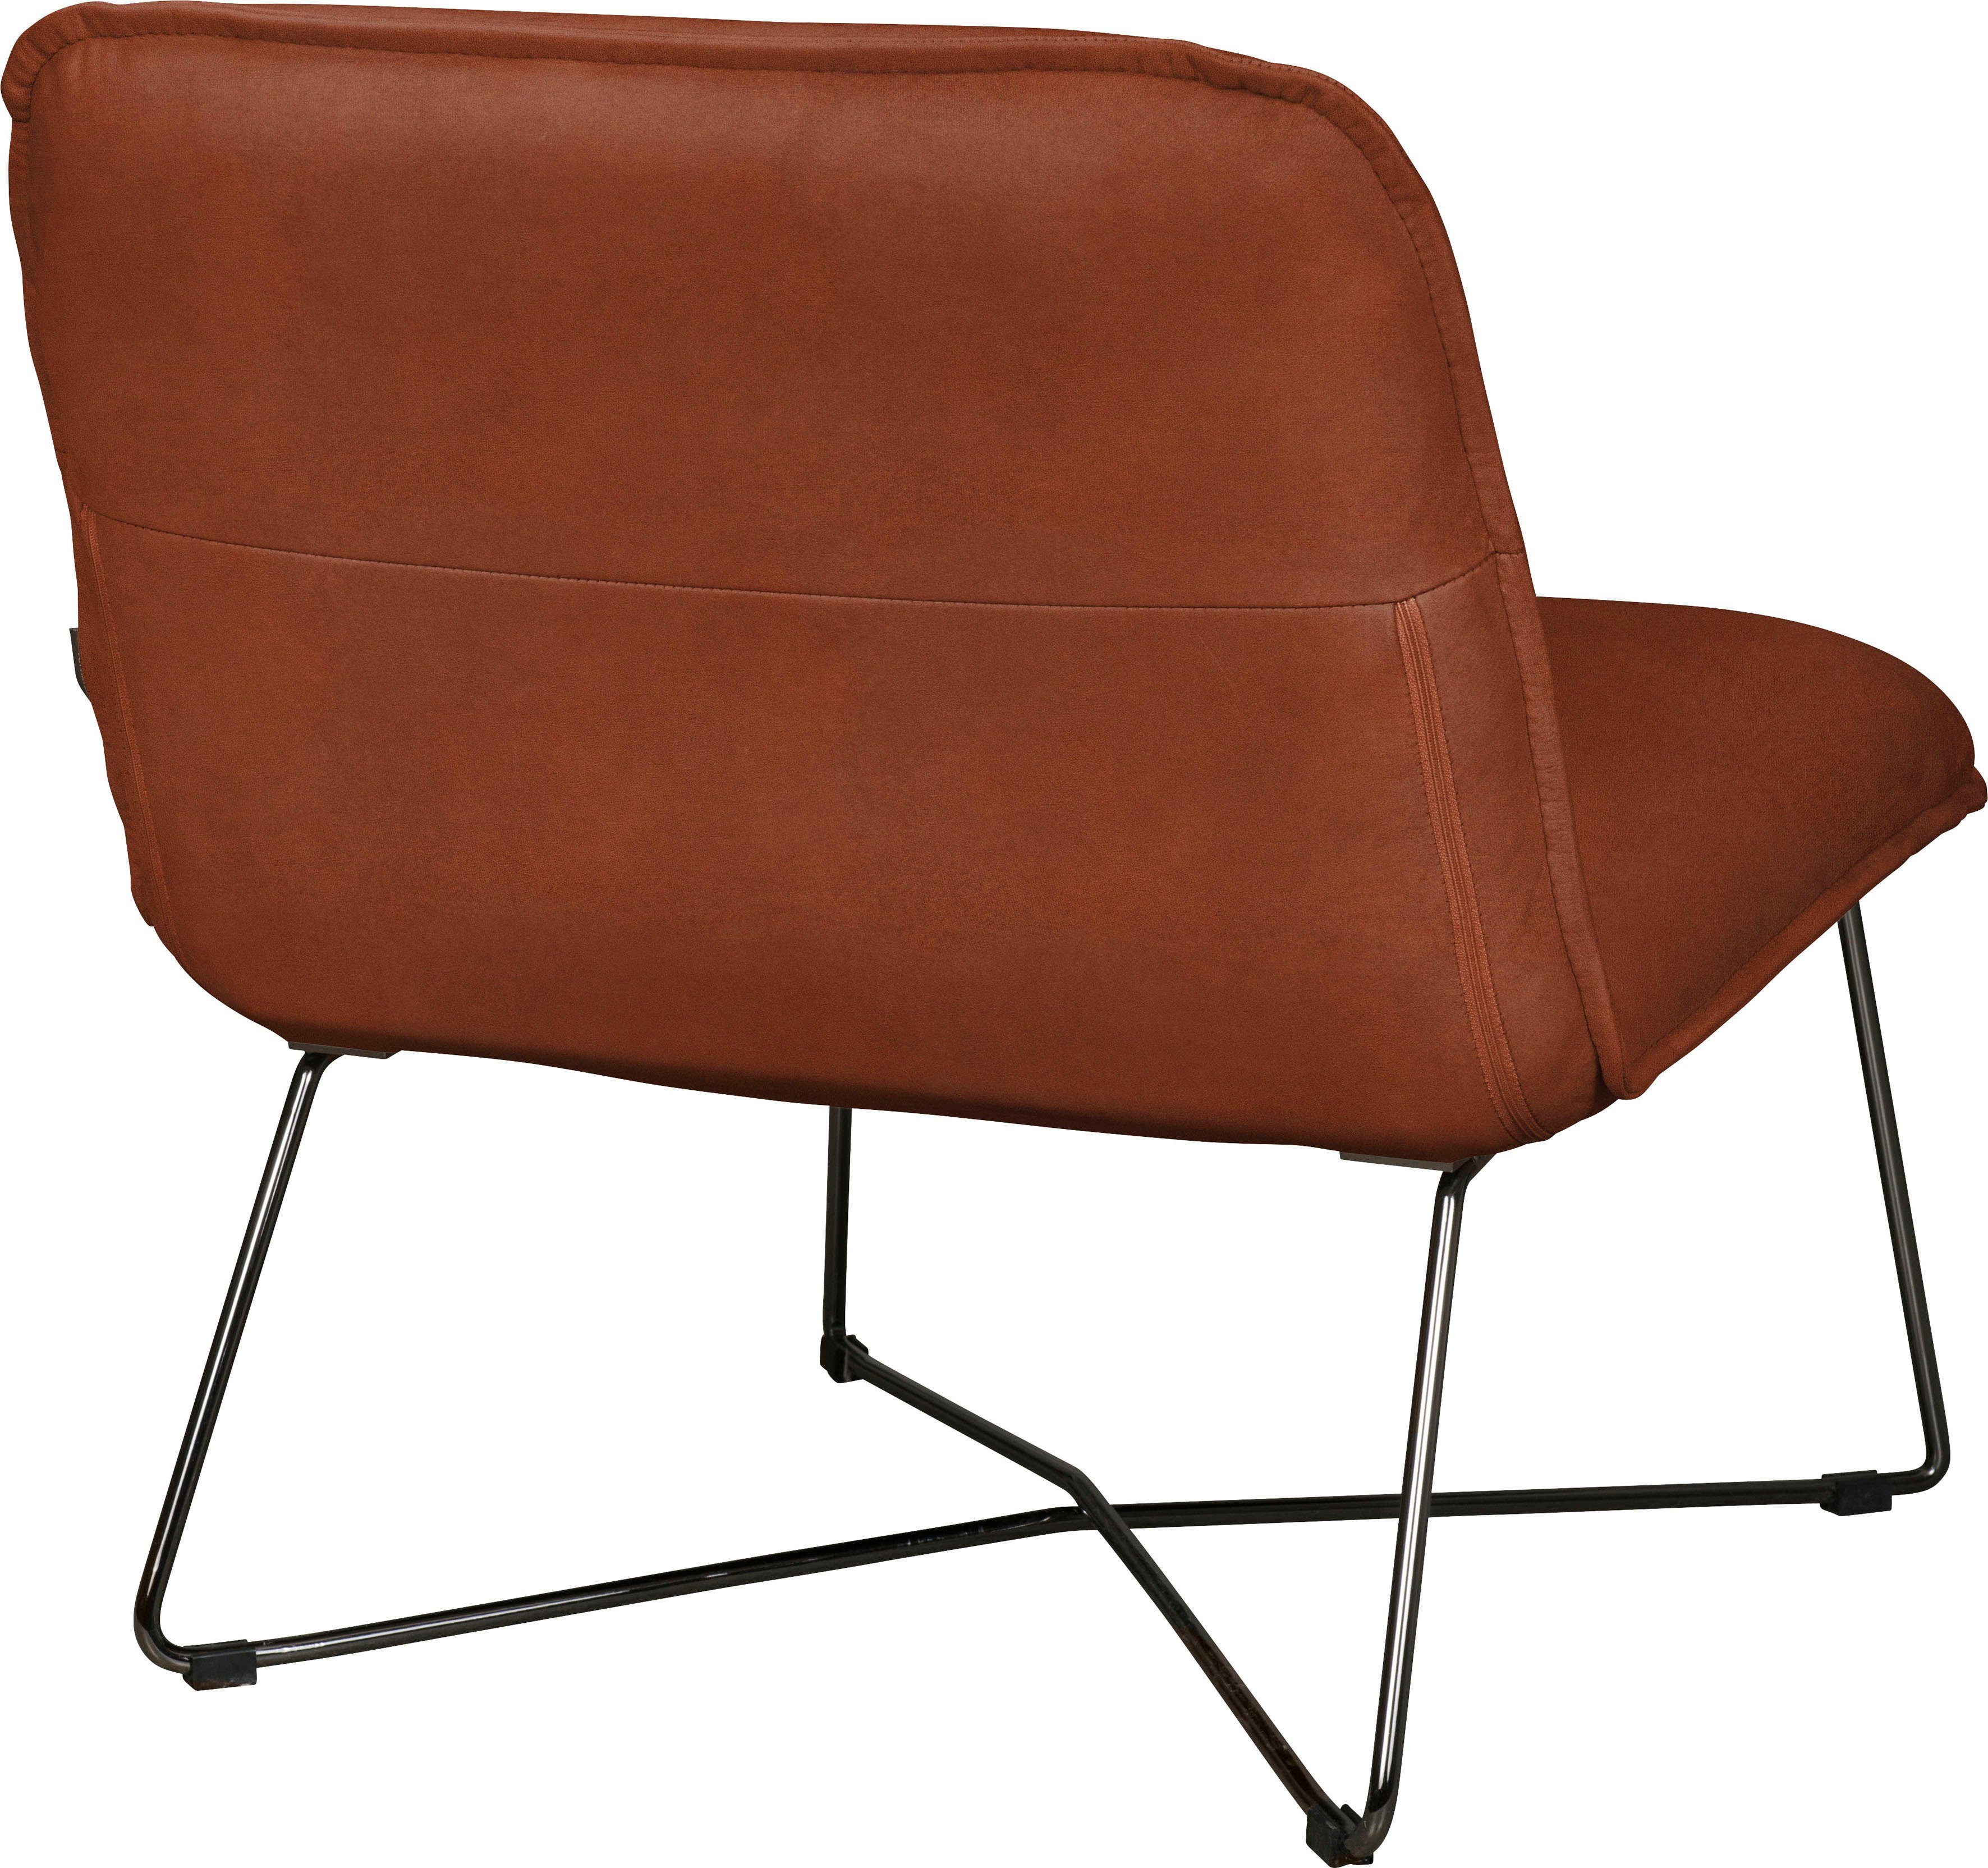 Loungesessel Design Fly, skandinavischen gemütlicher Loungesessel im bronze furninova